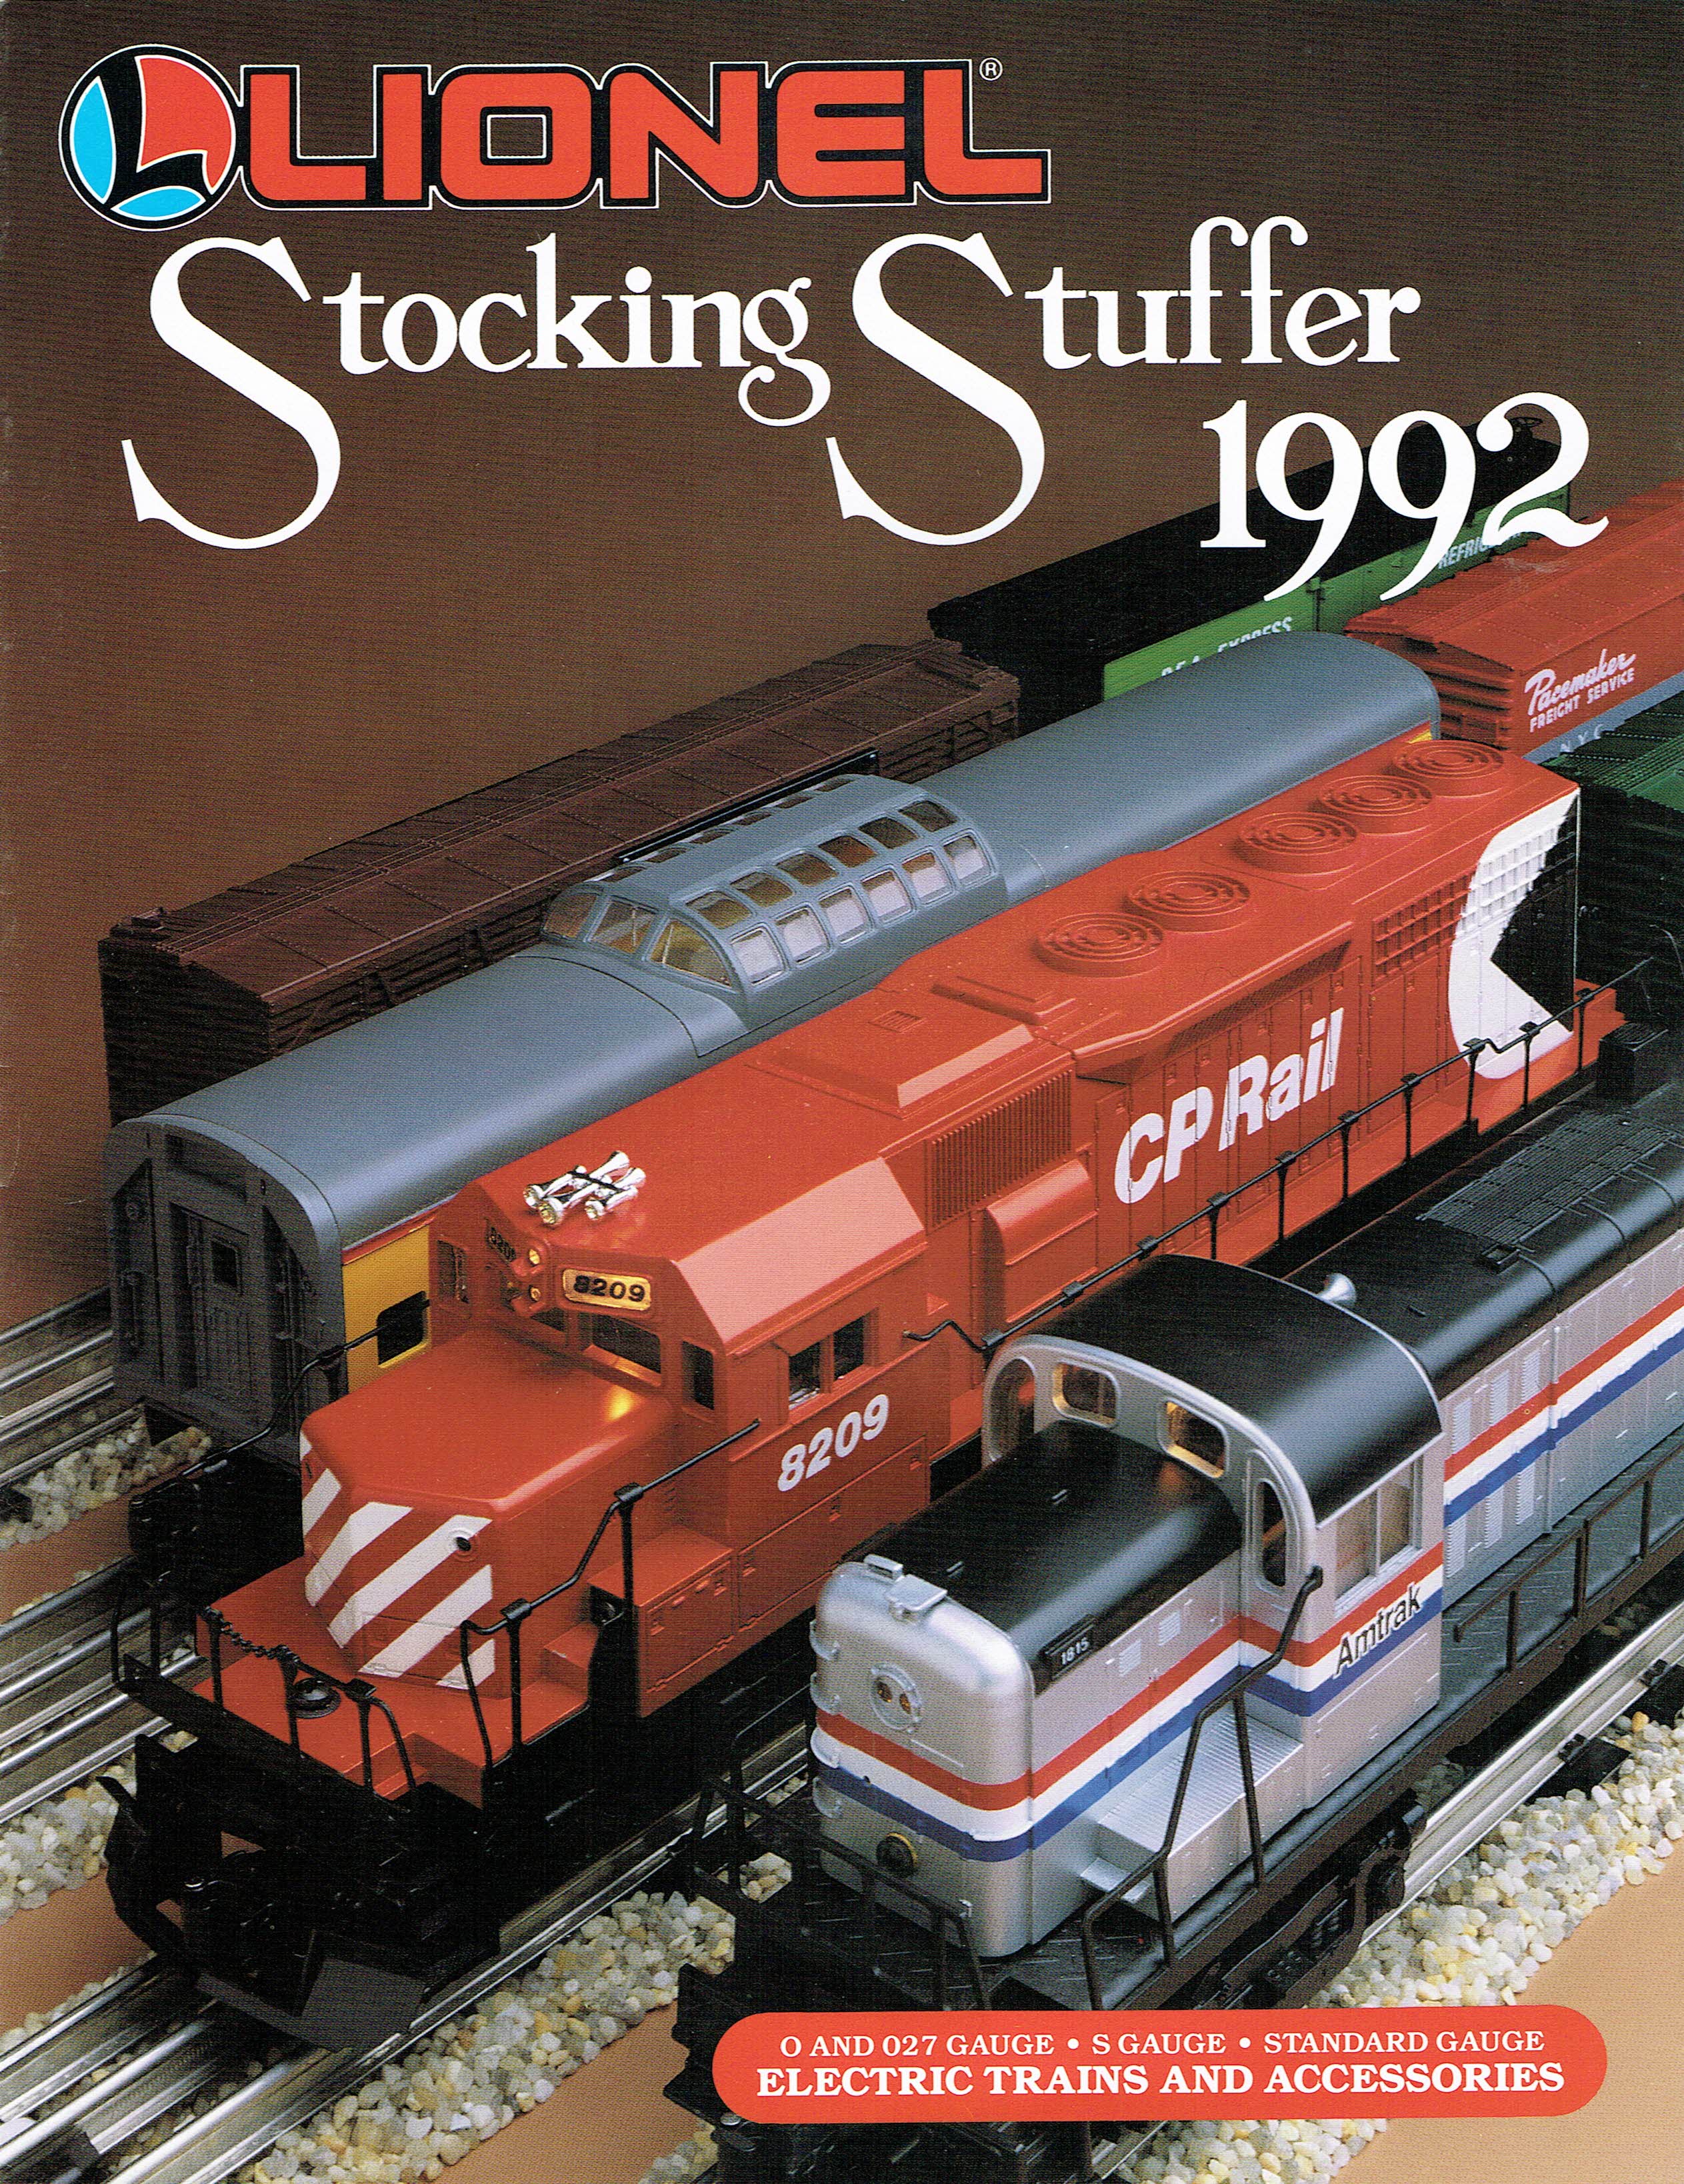 Lionel 1992 Stocking Stuffer Flier image